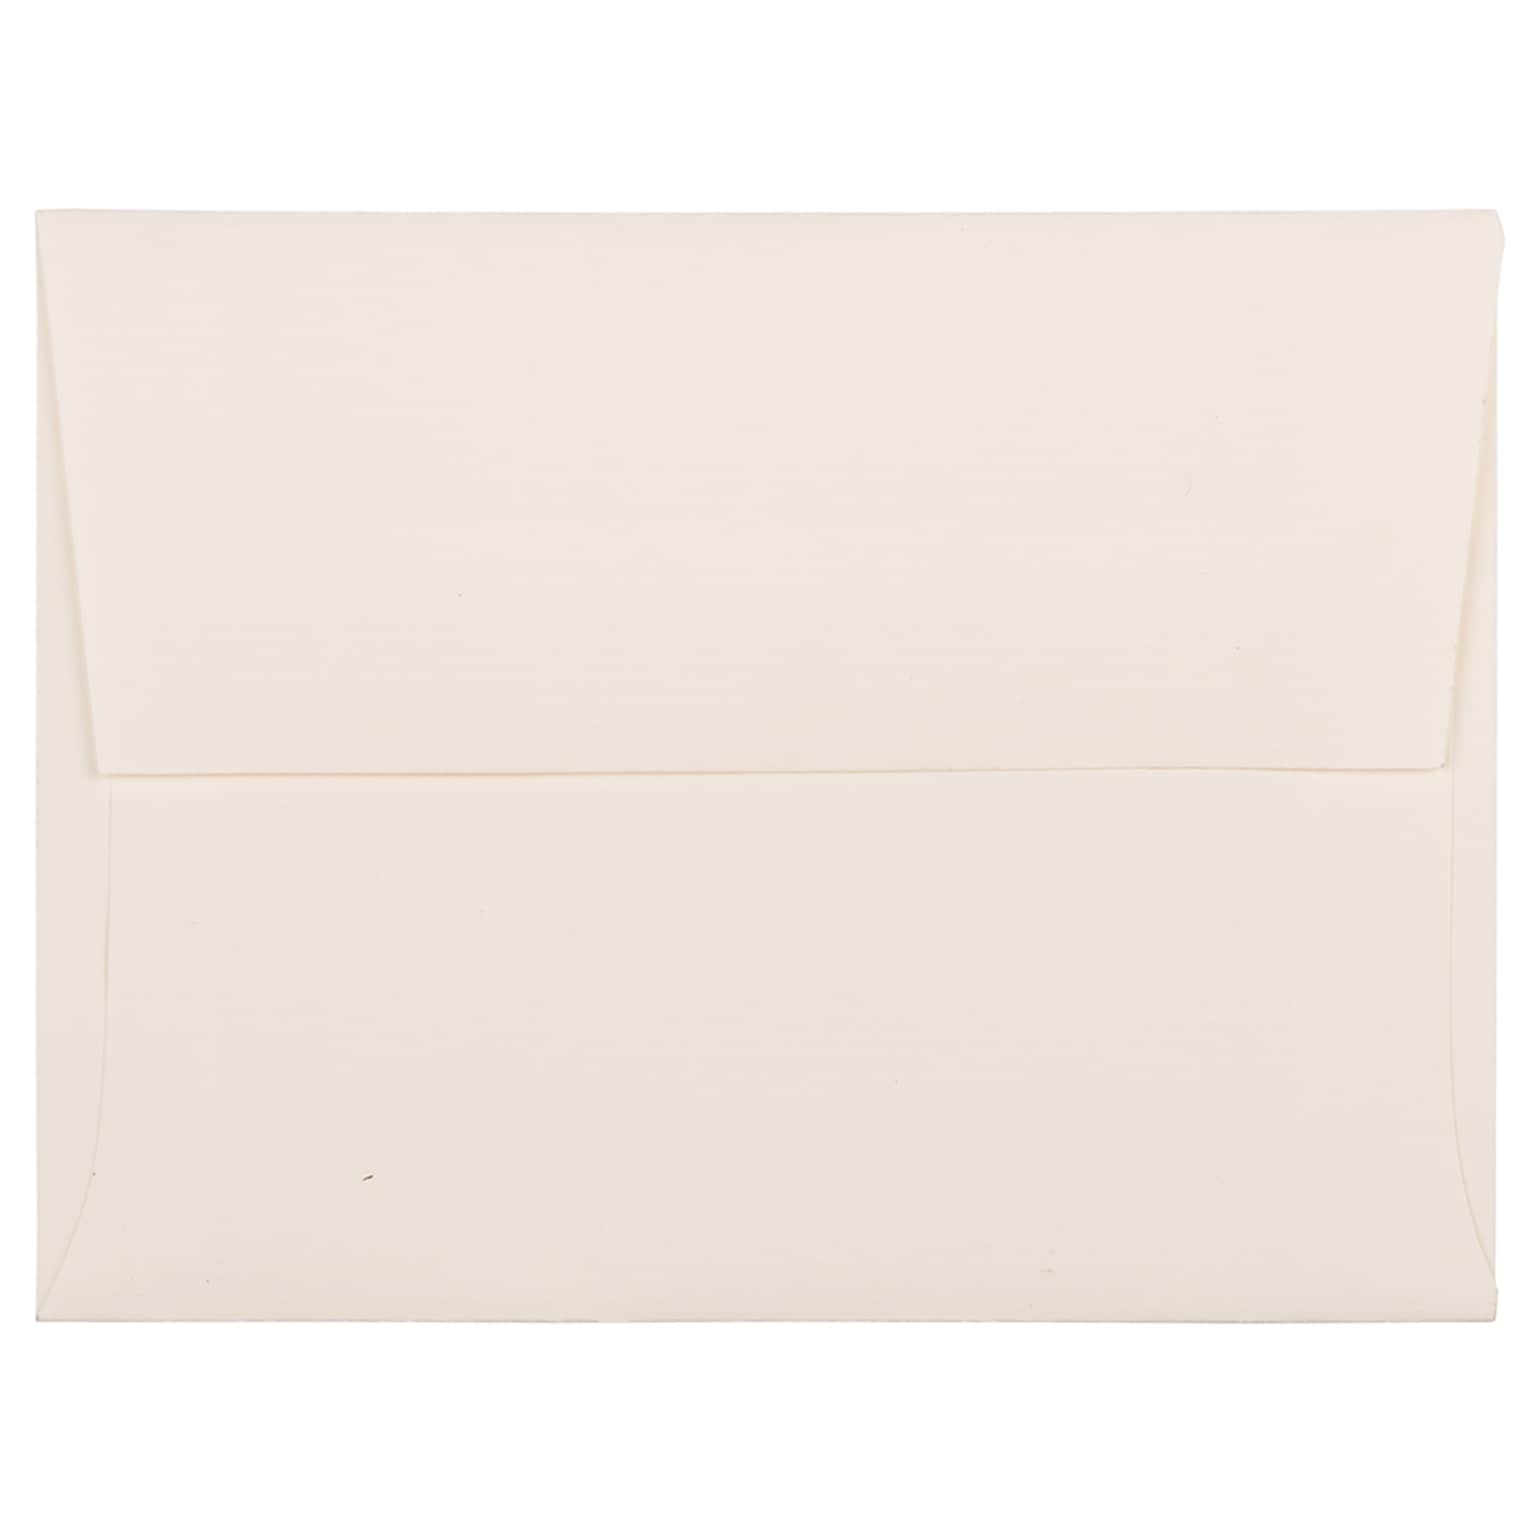 JAM Paper® A2 Strathmore Invitation Envelopes, 4.375 x 5.75, Natural White Pinstripe, 25/Pack (50170)